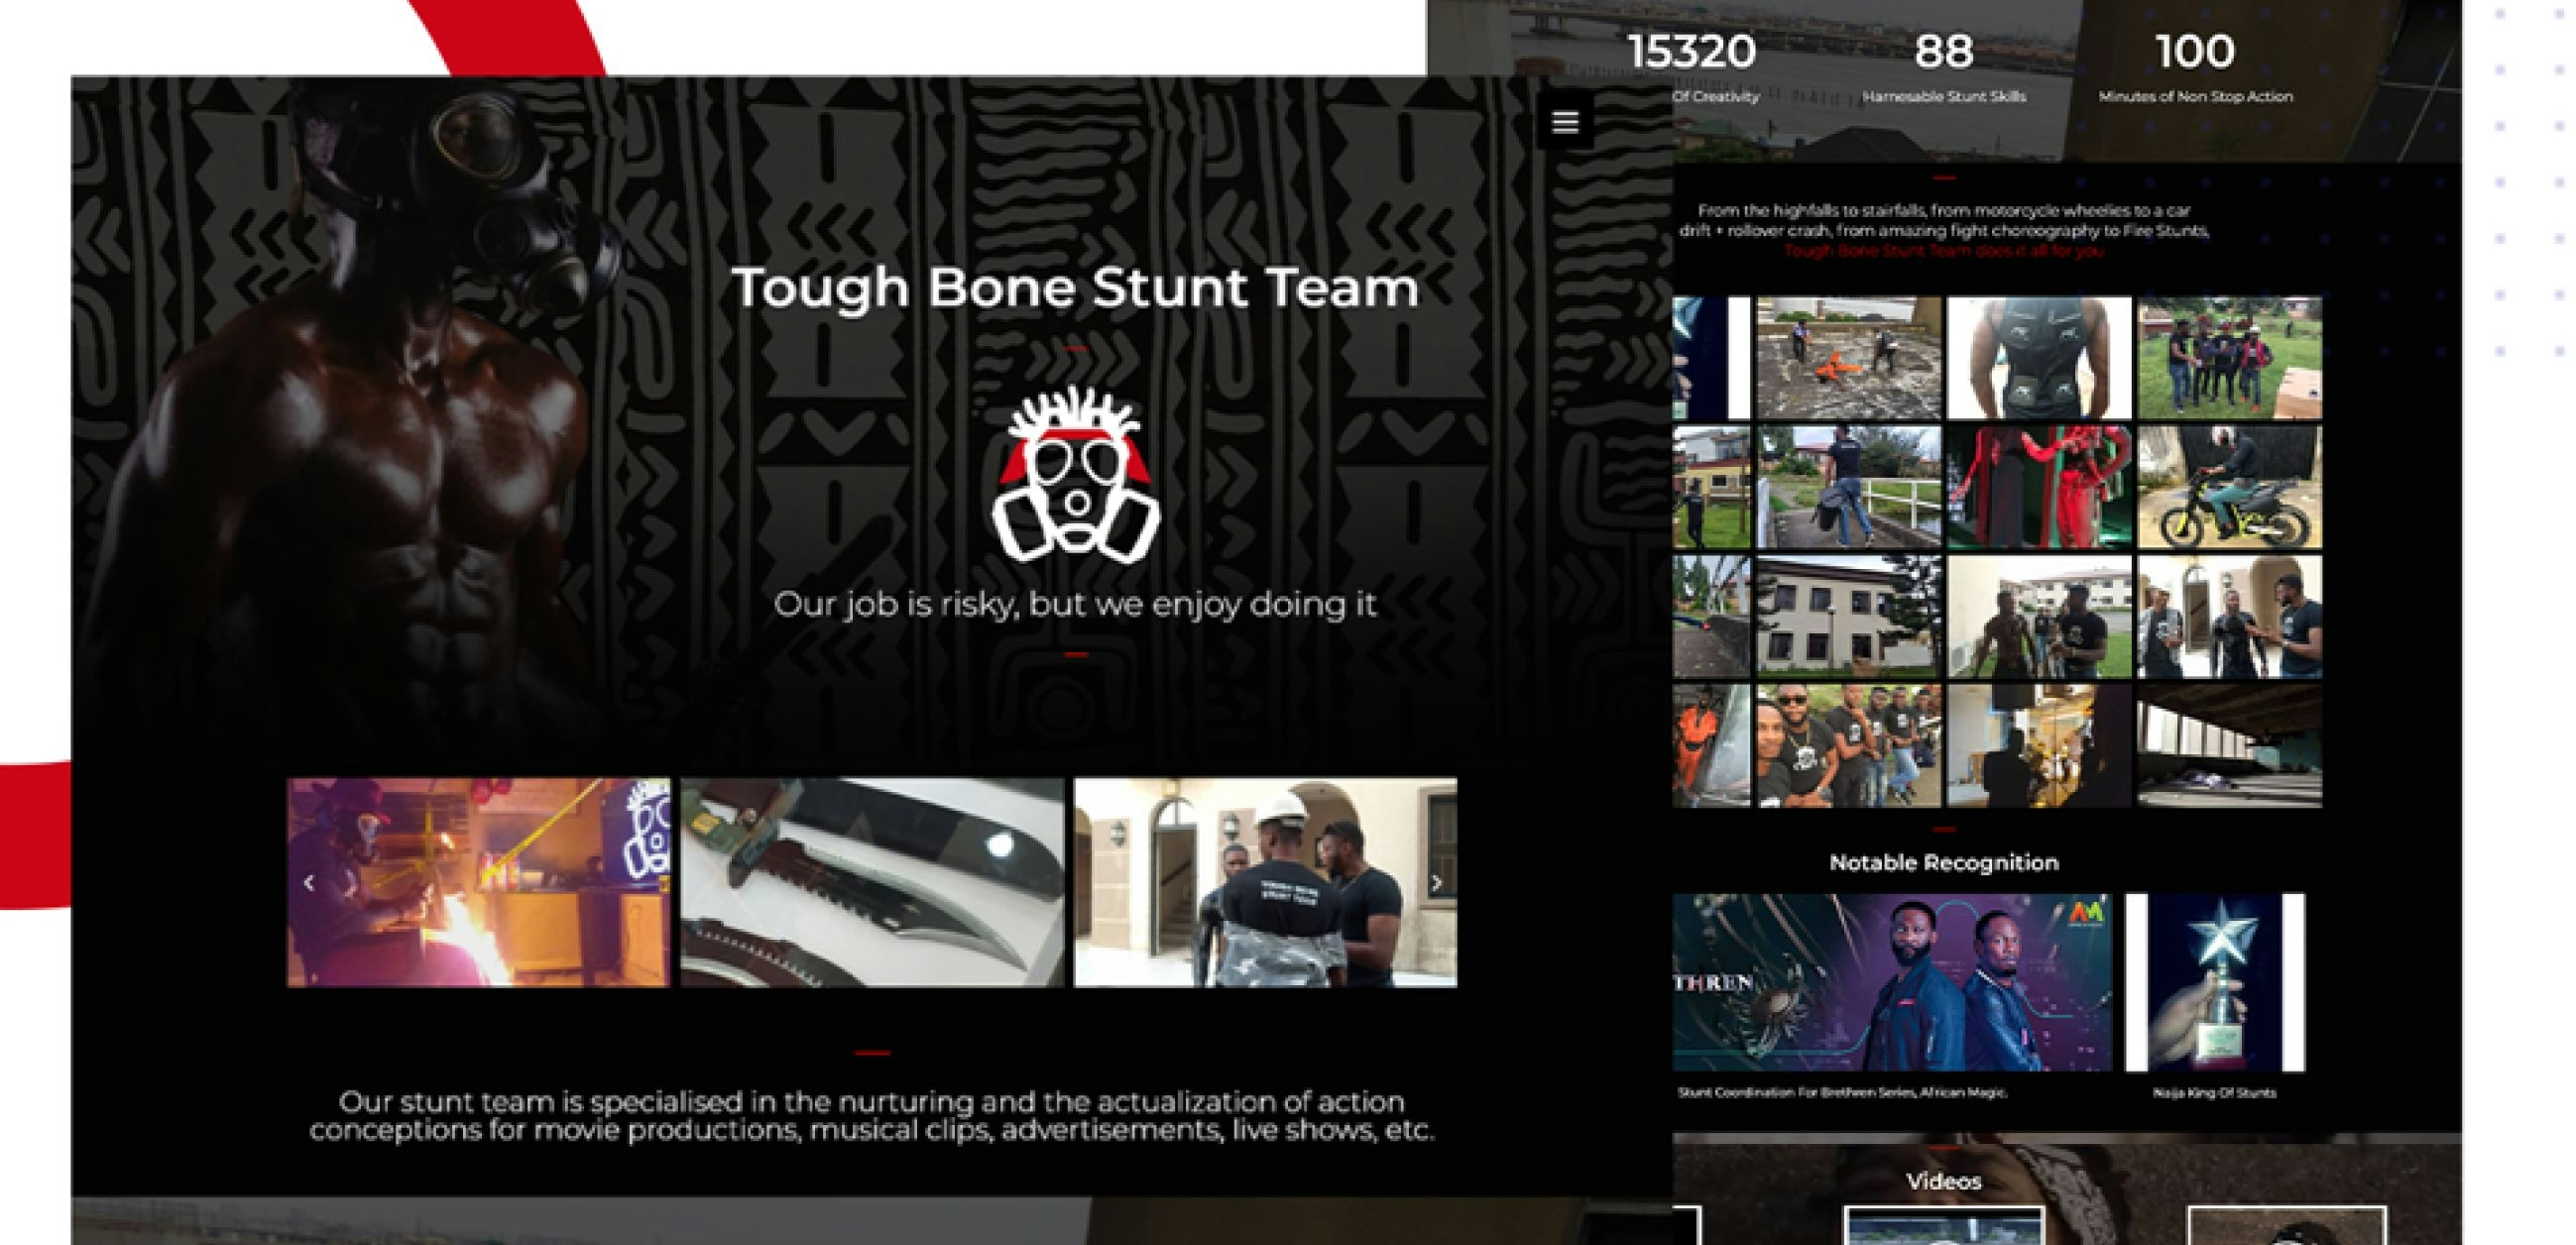 Tough Bone Stunt Team